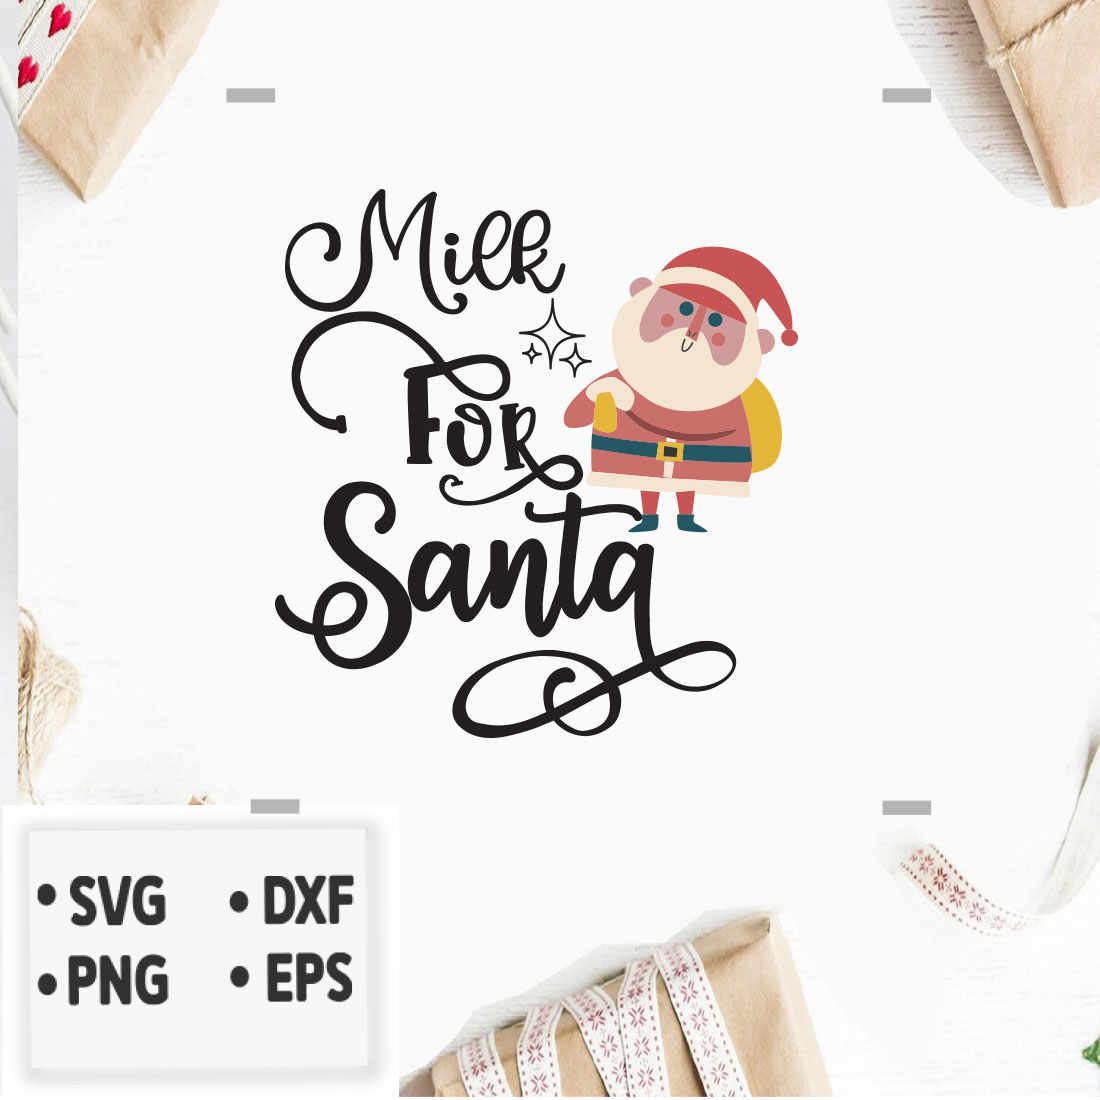 Image with a wonderful inscription Milk for Santa.